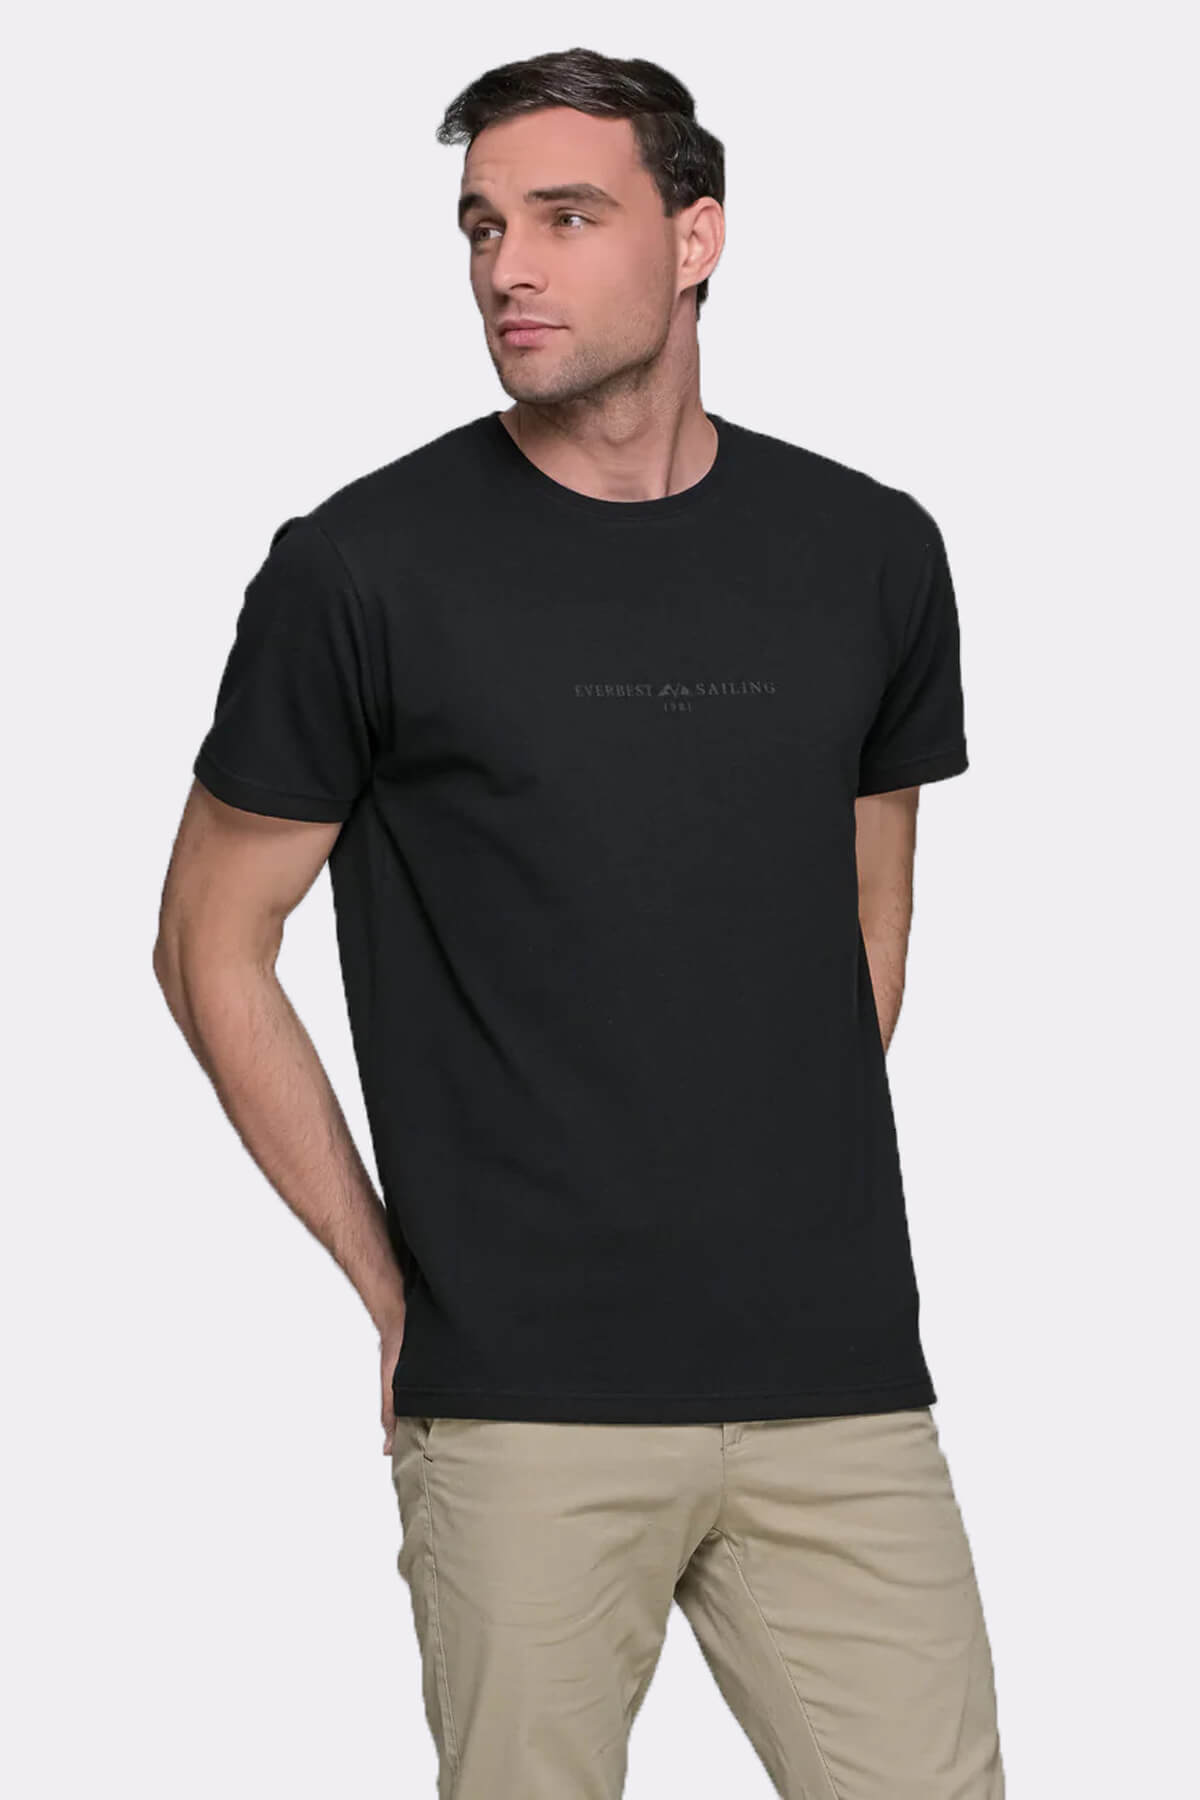 Everbest T-Shirt Με Ανάγλυφο Σχέδιο Novo